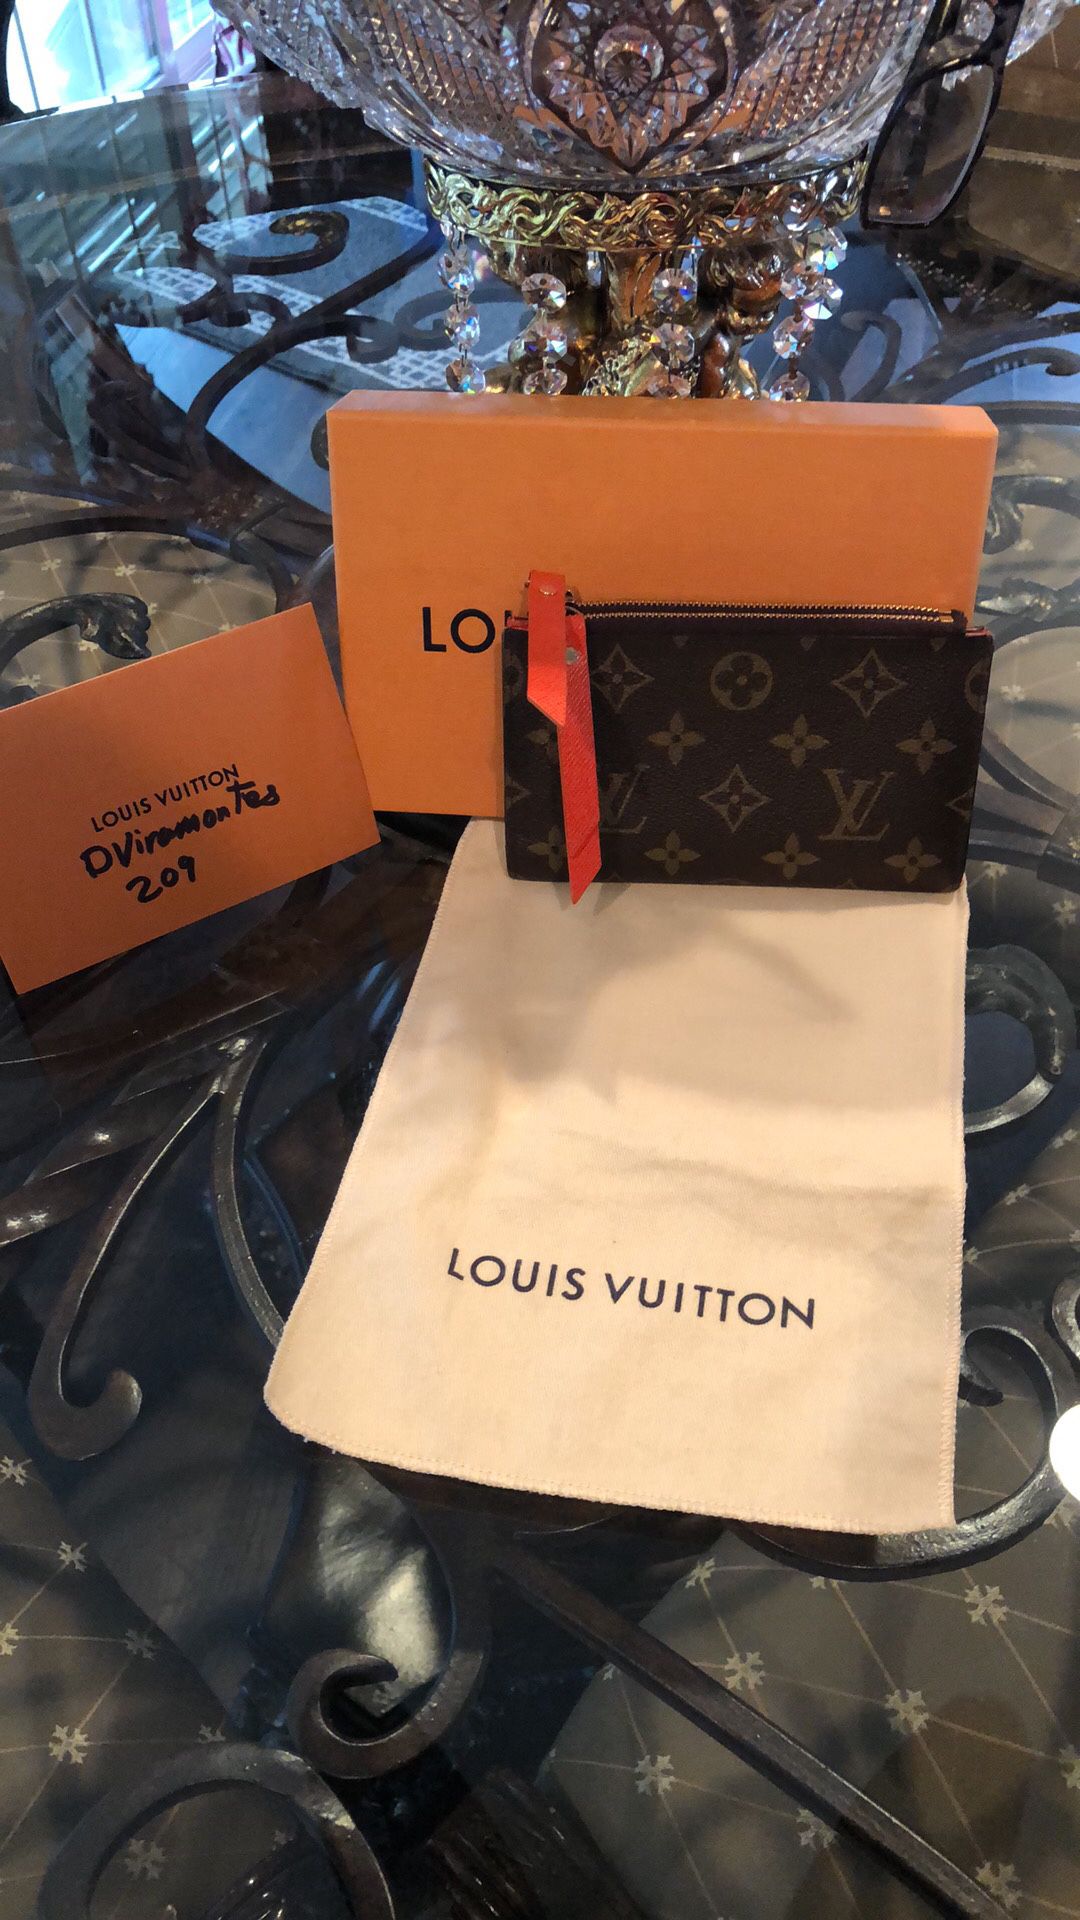 Louis Vuitton ADELE COMPACT WALLET